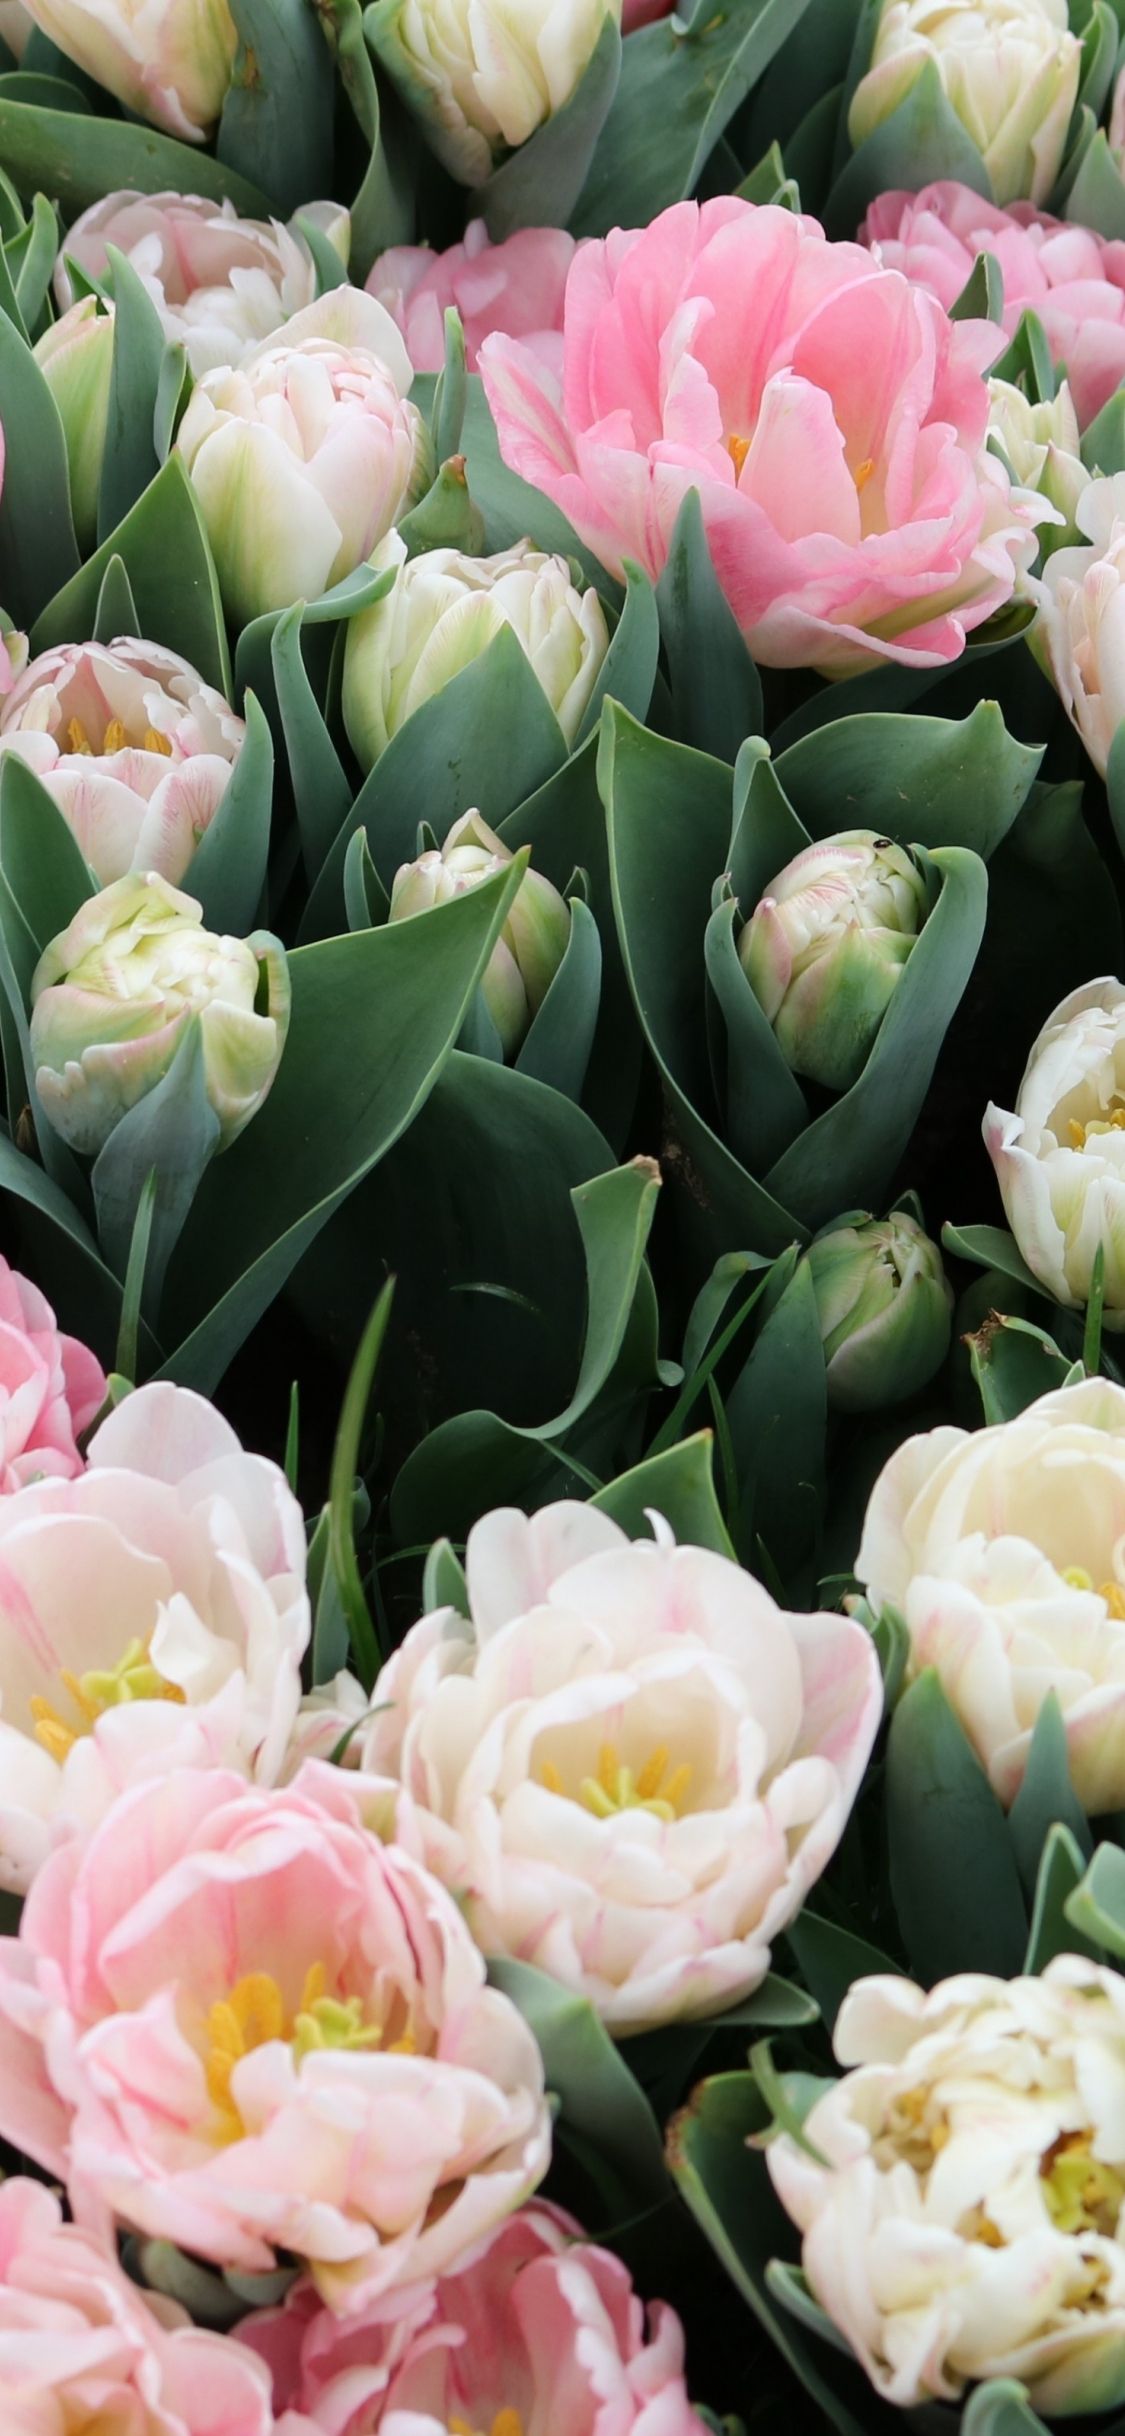 Download 1125x2436 wallpaper tulips, fresh, white & pink flowers